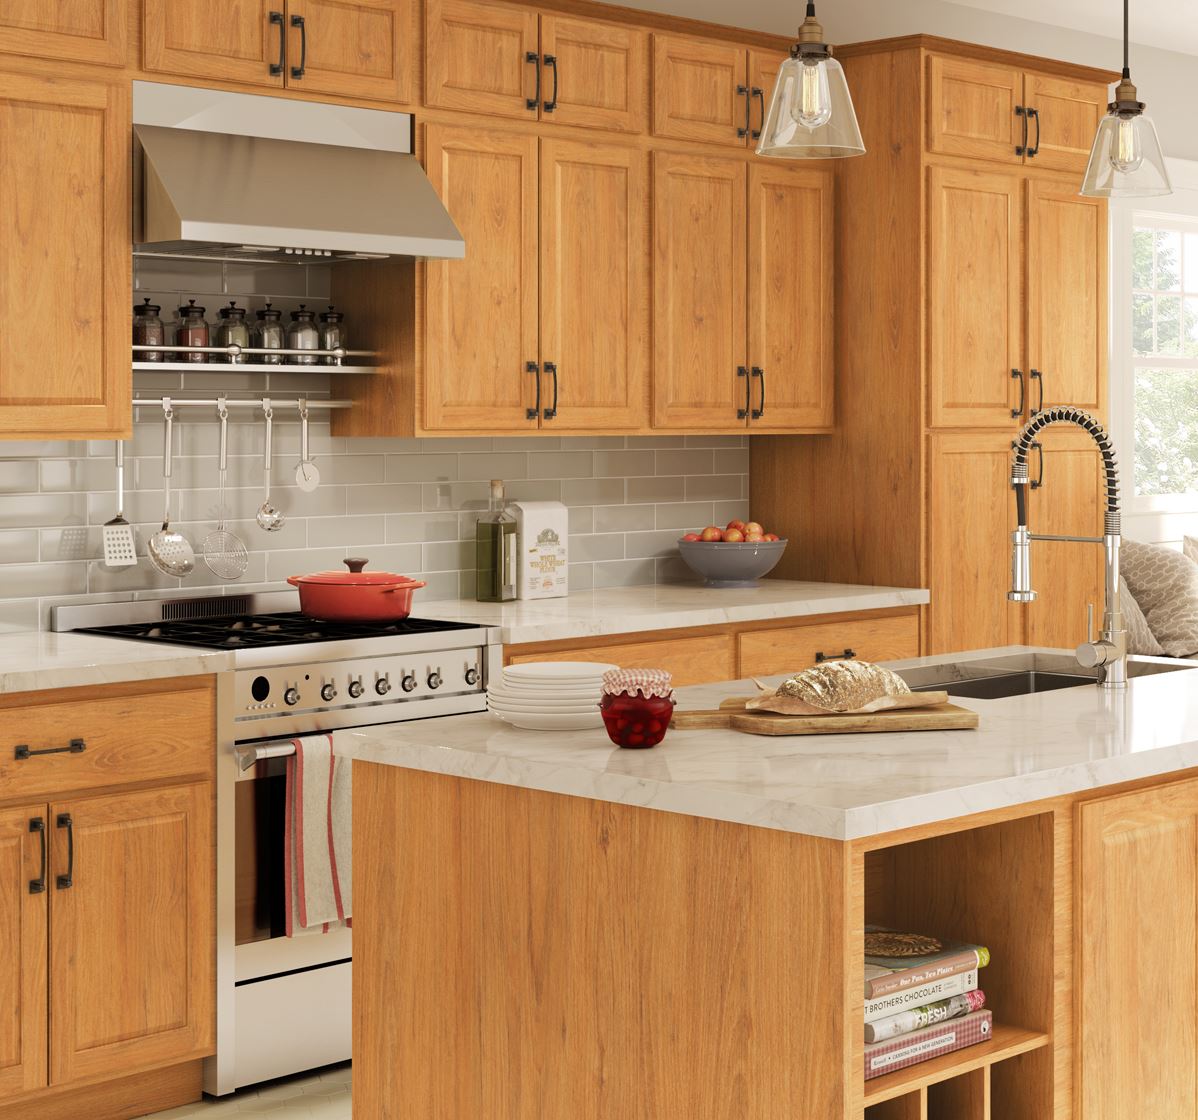 6 Easy Ways To Update Oak Cabinets - Homemaking.com